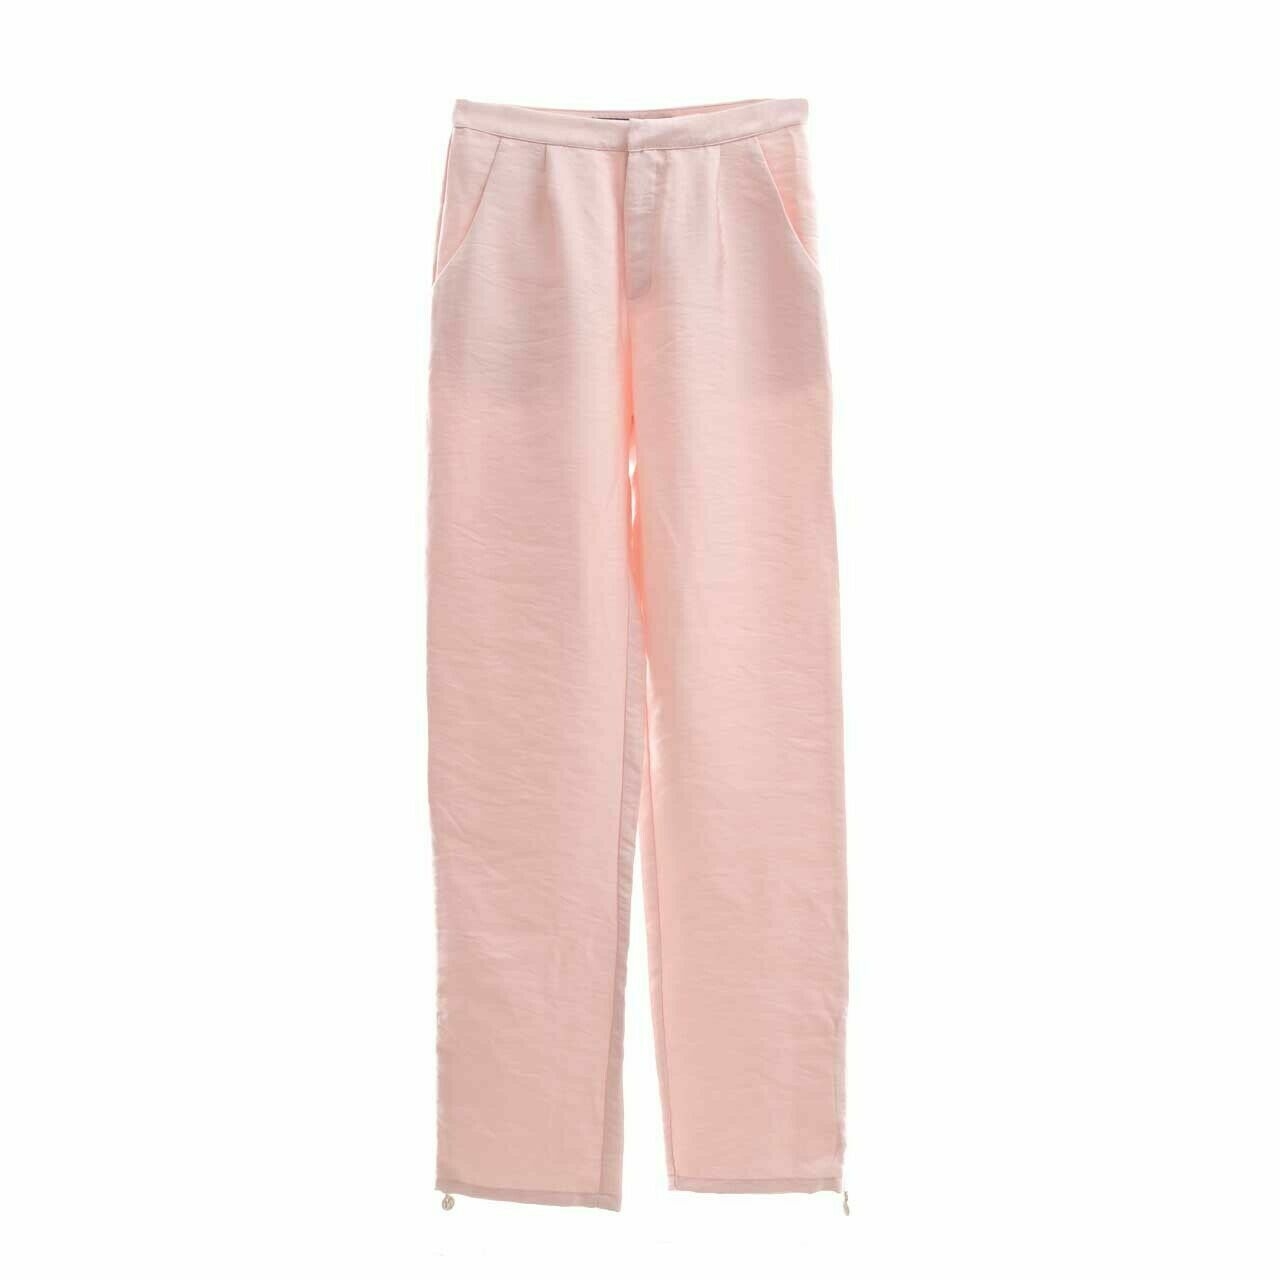 Aere Pink Pants